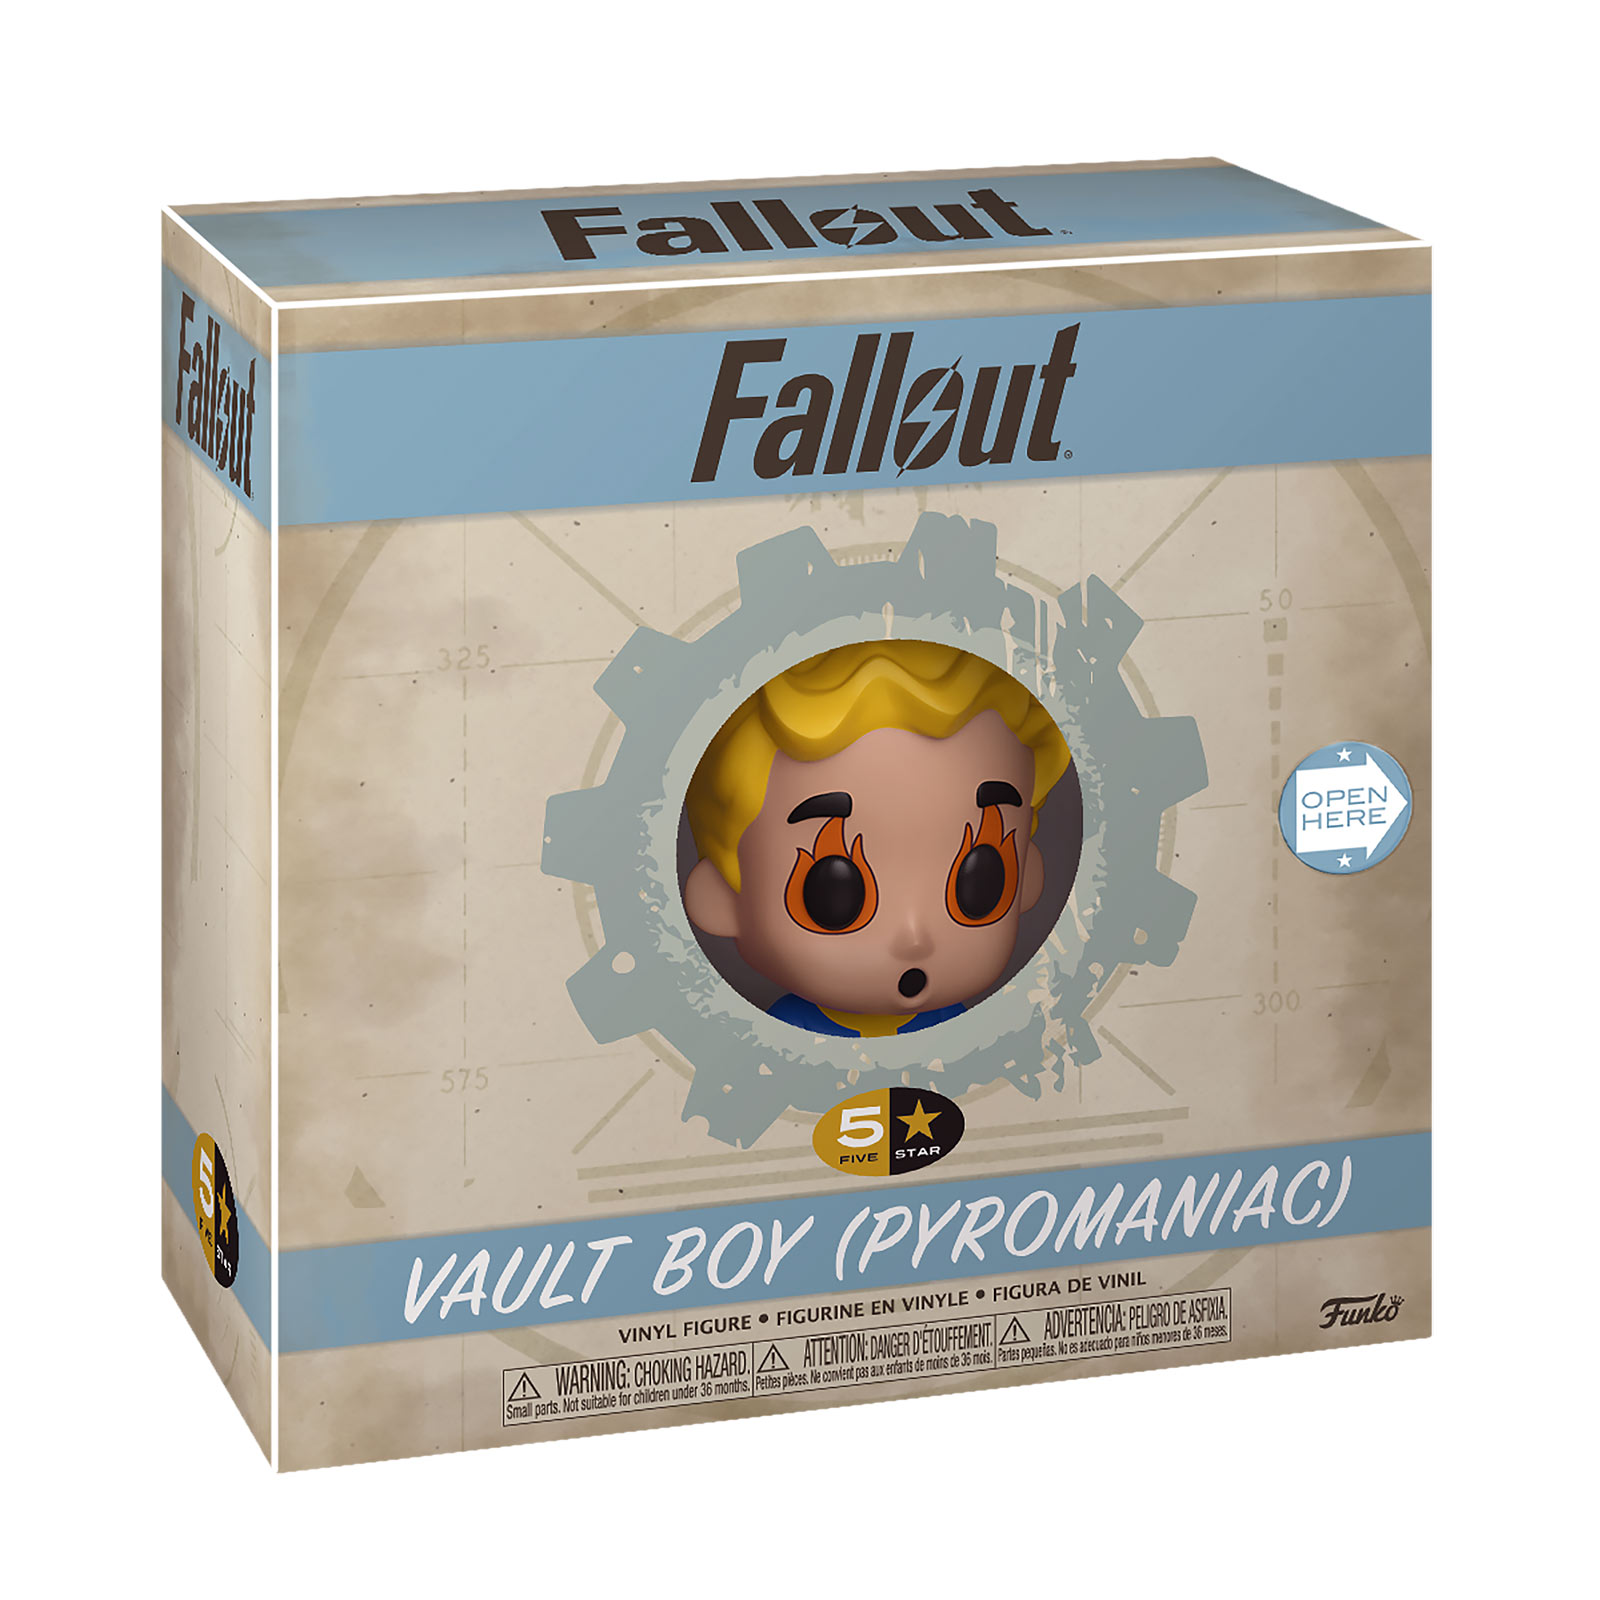 Fallout - Vault Boy Pyromaniac Funko Five Star Figur